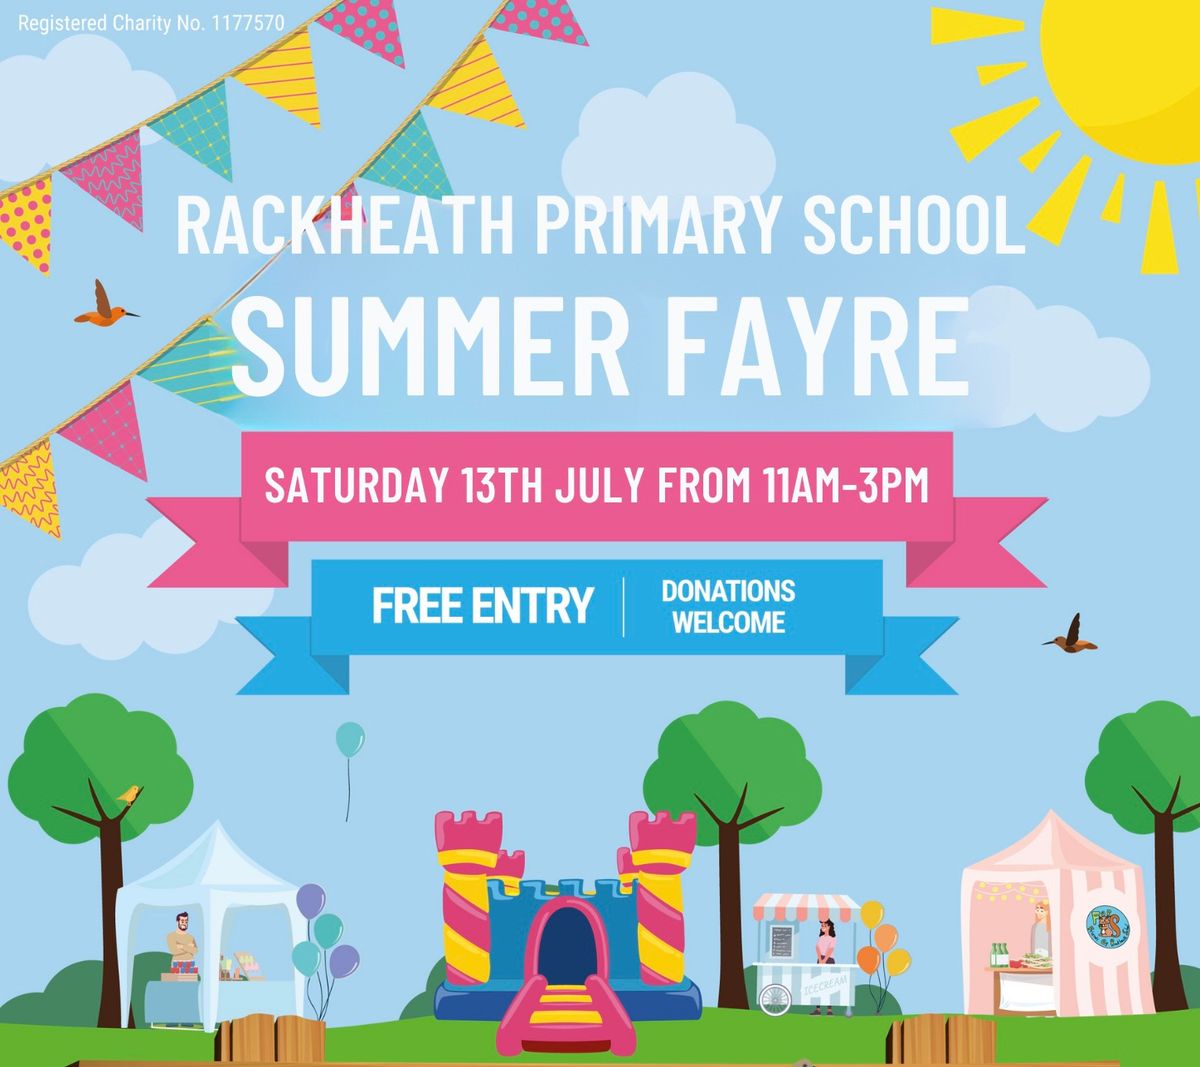 Rackheath Primary School Summer Fayre 